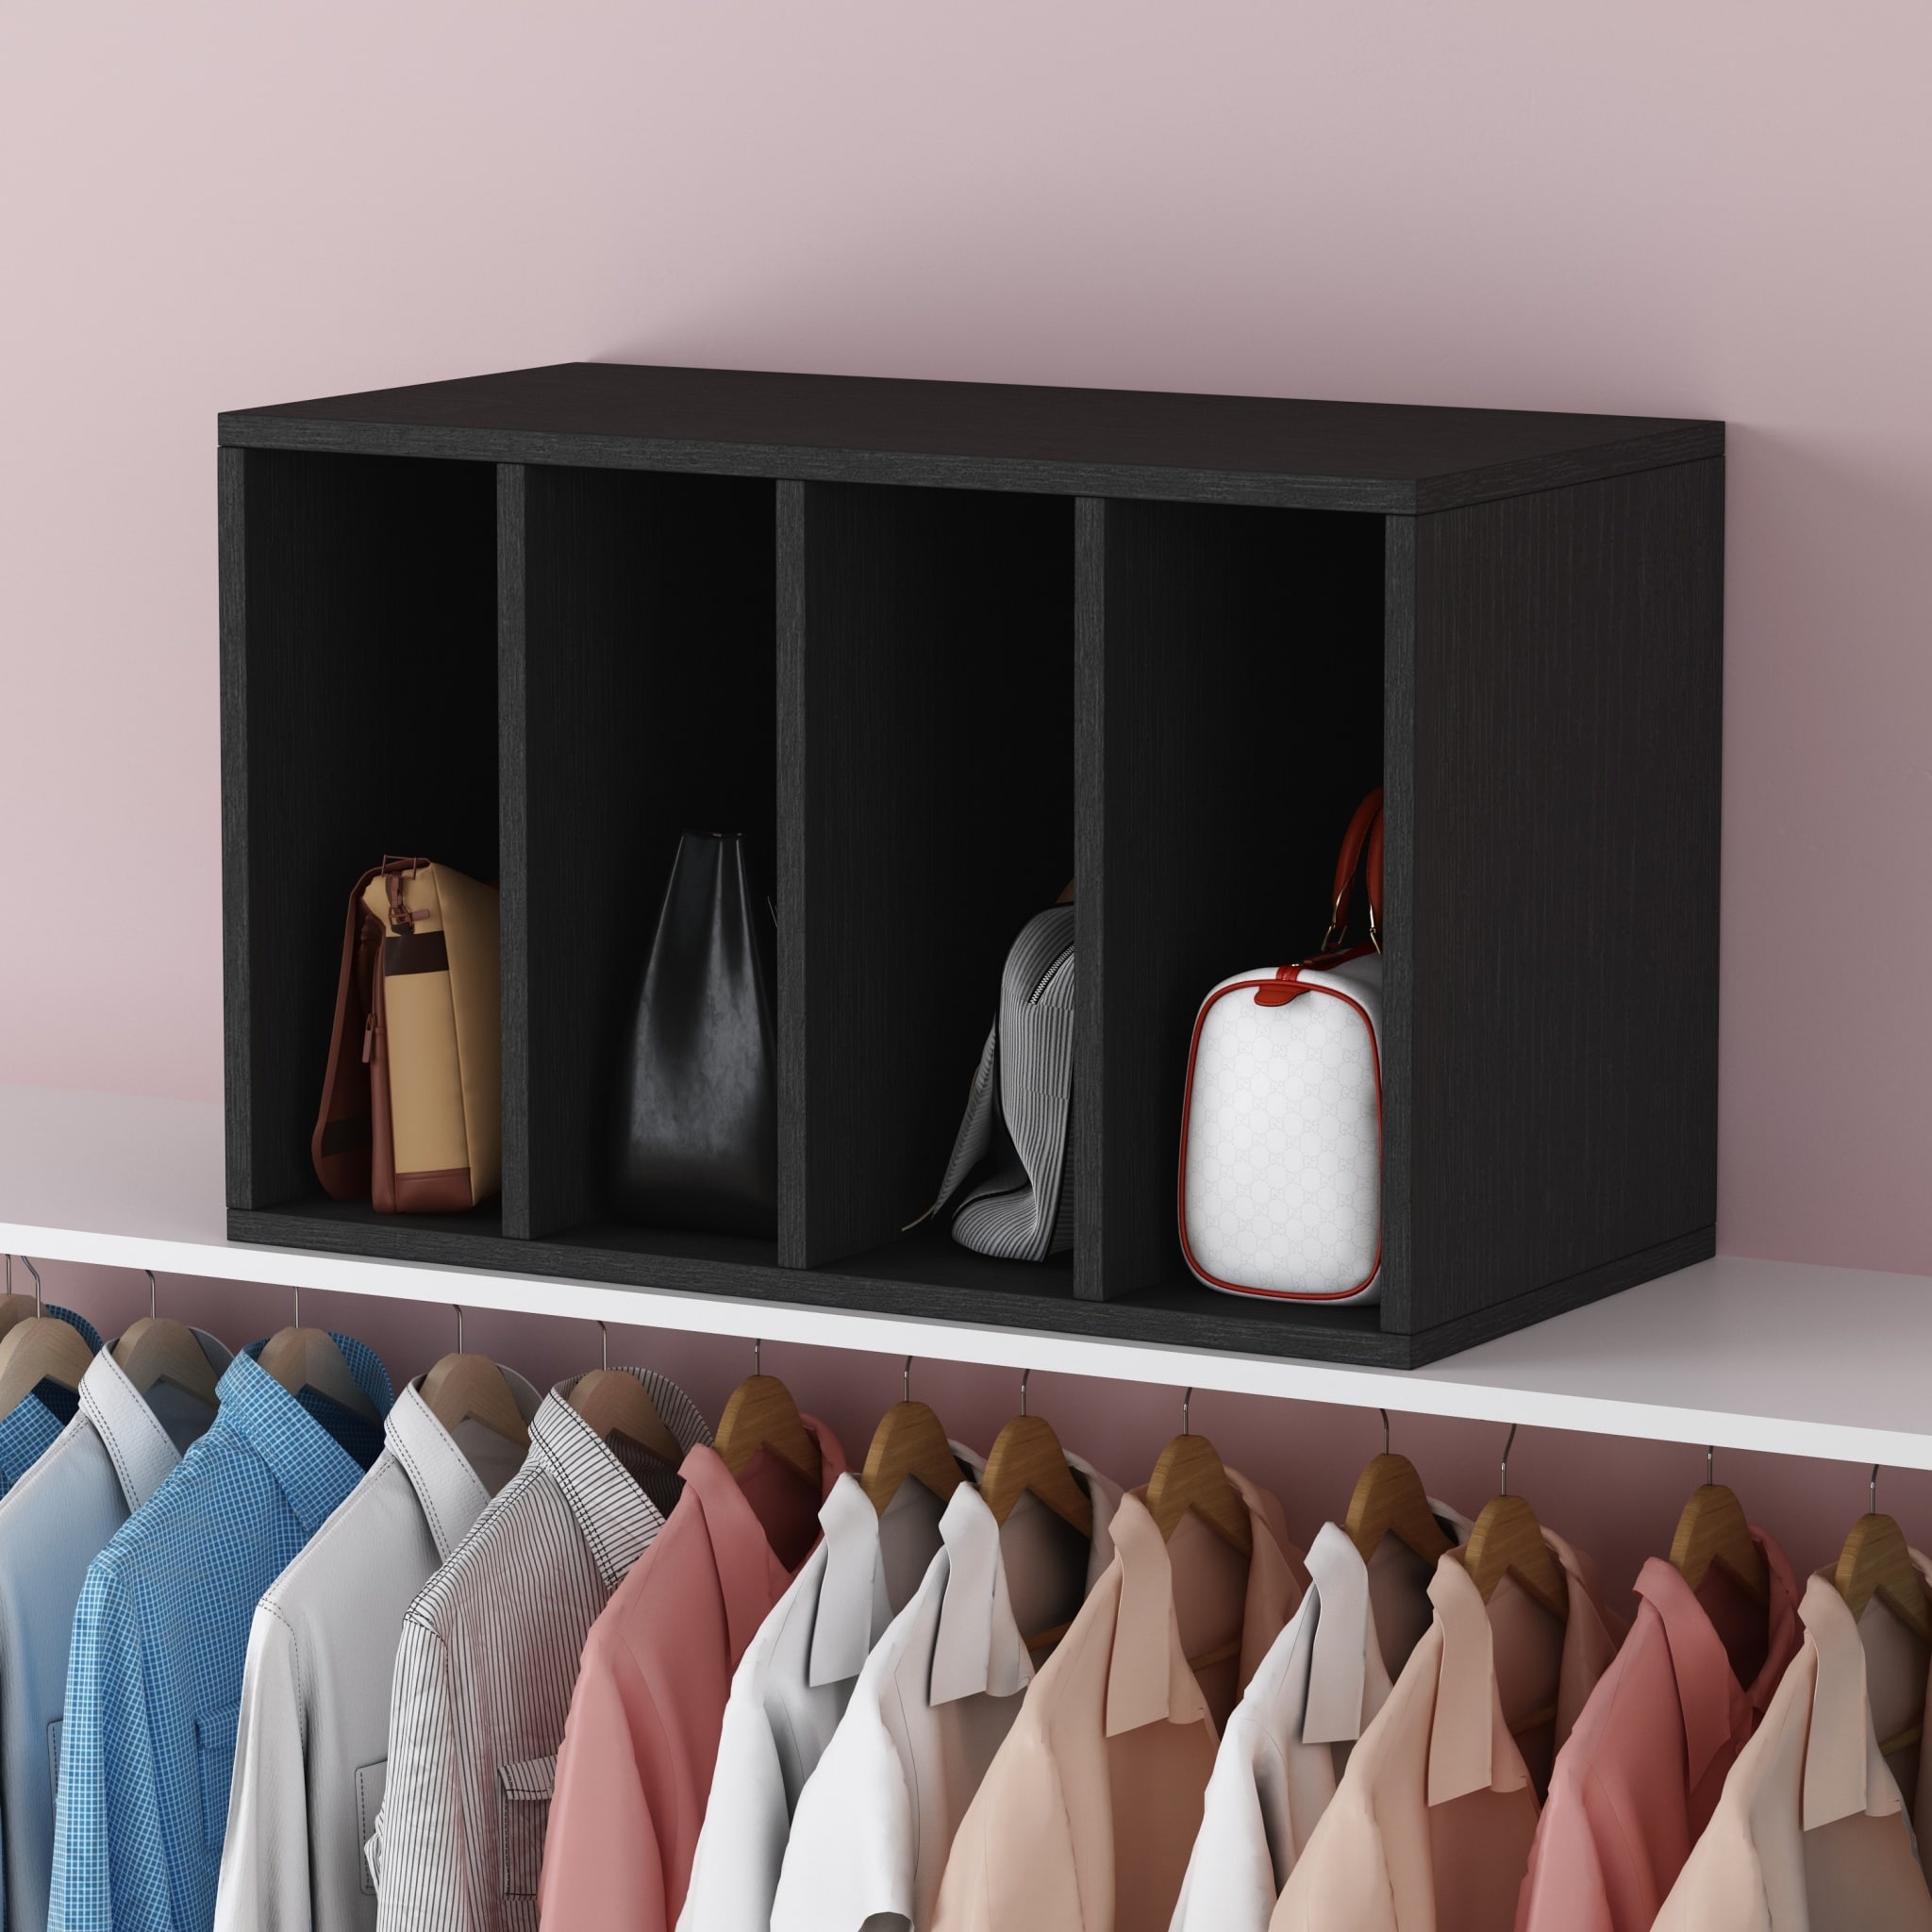 Purse Organizer Clutch Bag Wallet Storage Solution for Closet Dresser Bedroom%2C 4 Sections